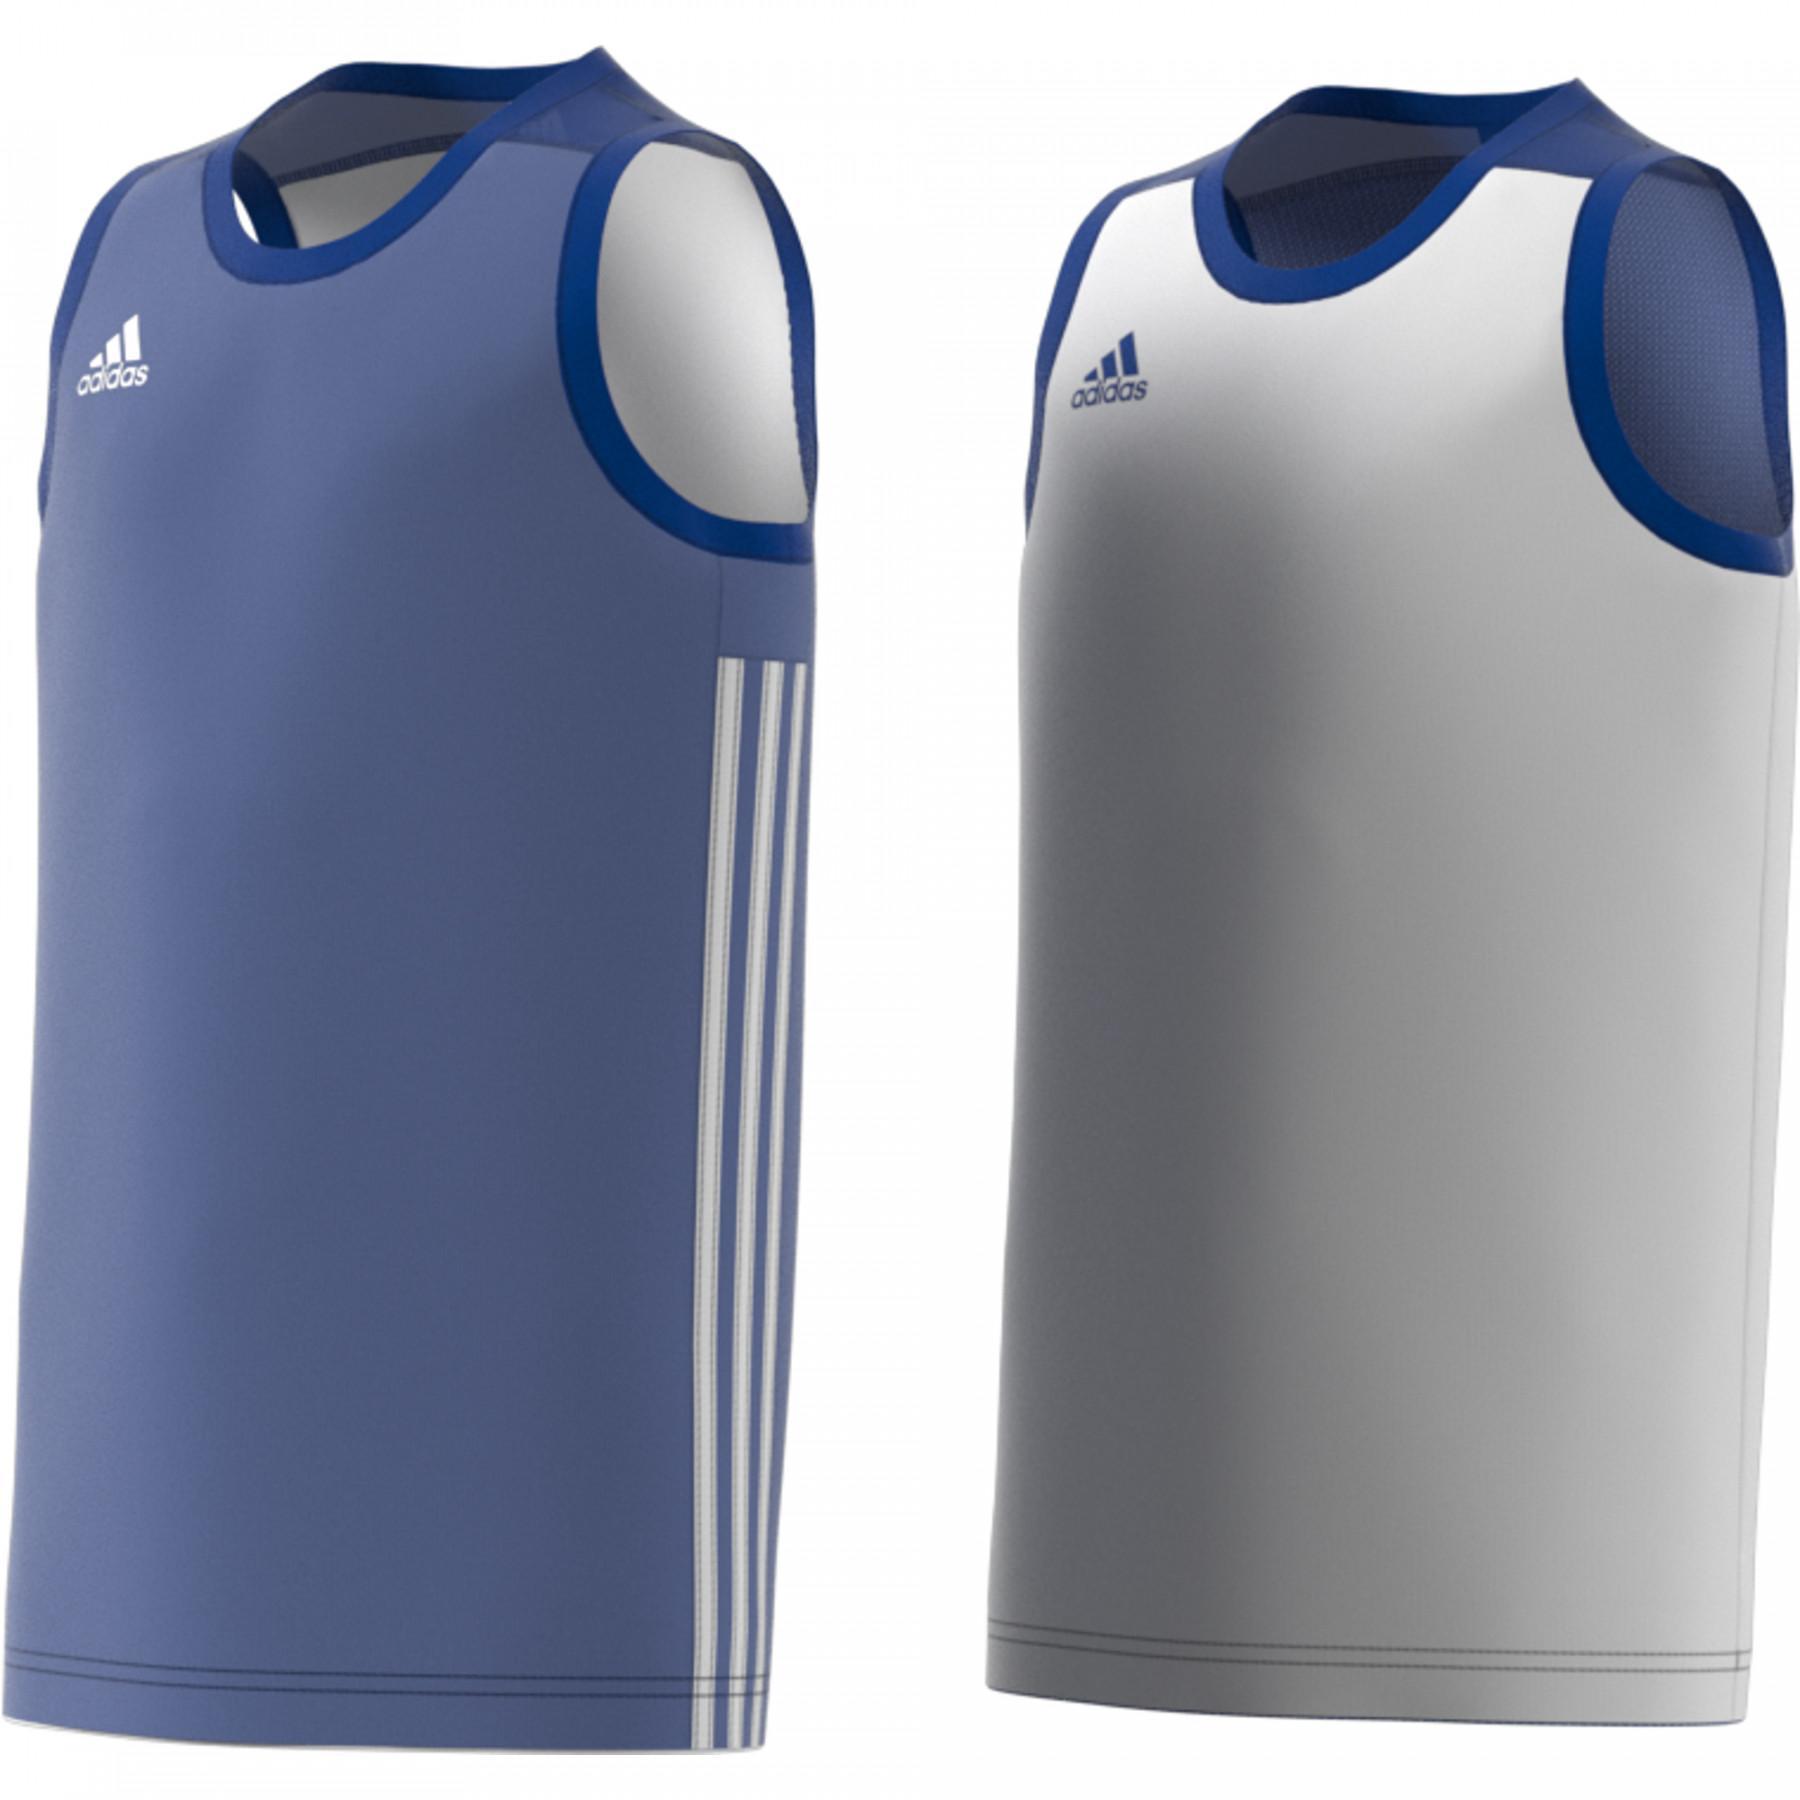 Adidas Larry Bird Active Jerseys for Men